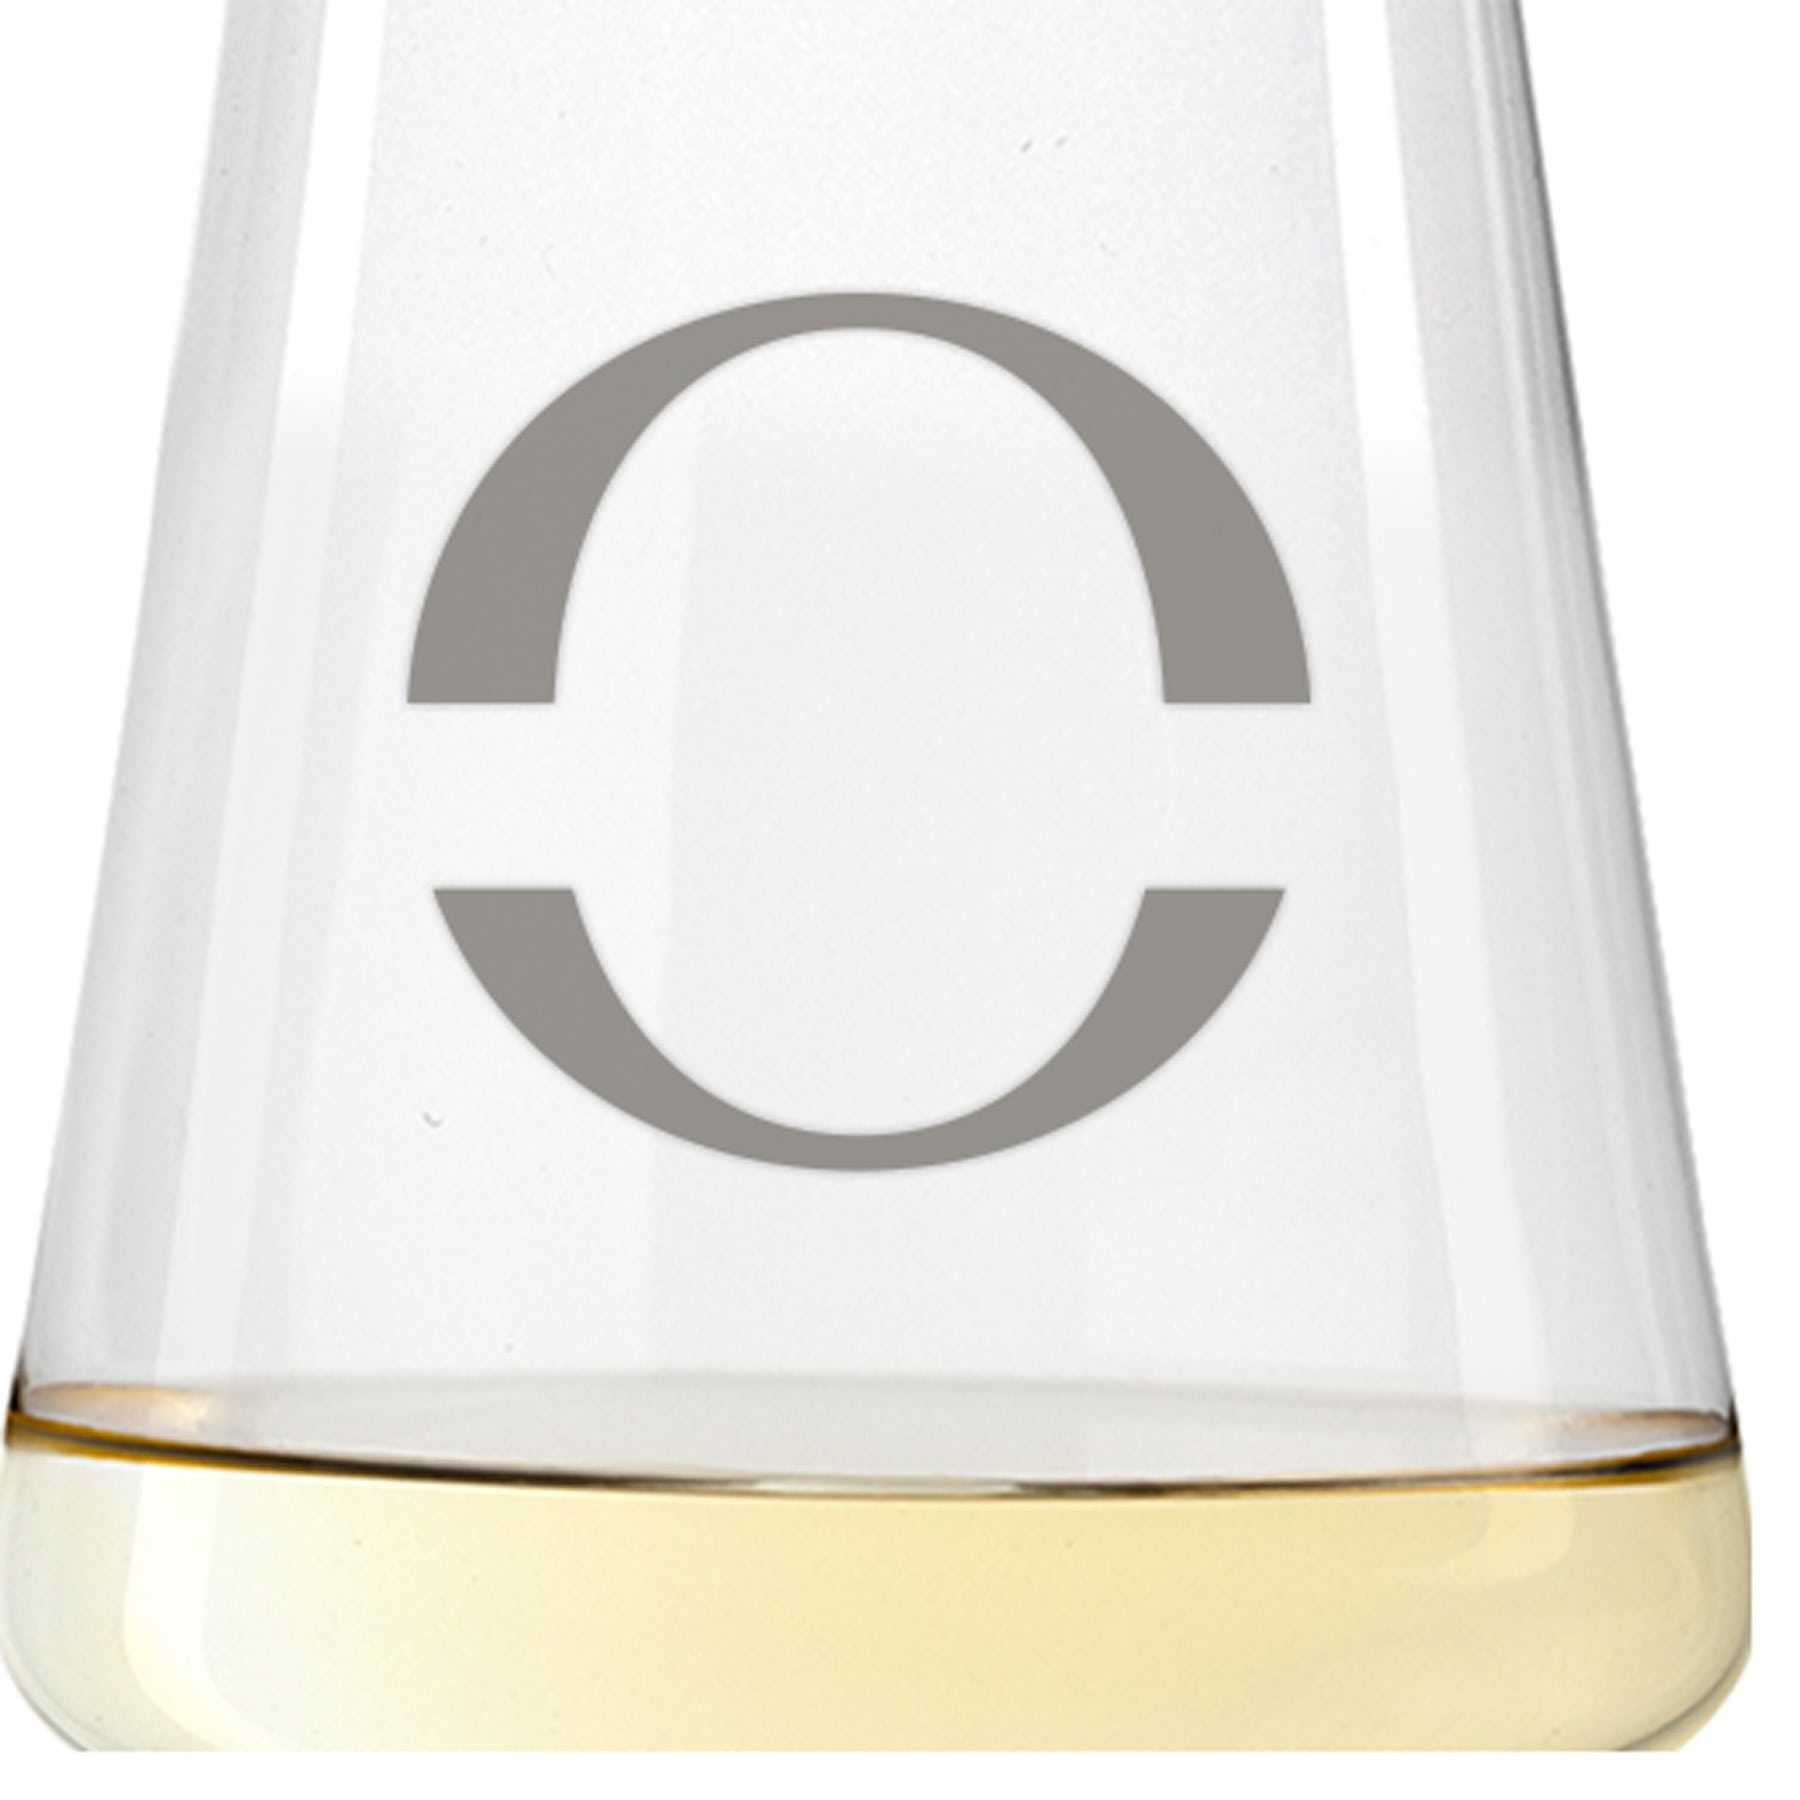 Leonardo Weißweinglas PUCCINI 560ml mit Namen oder Wunschtext graviert (Initialen)